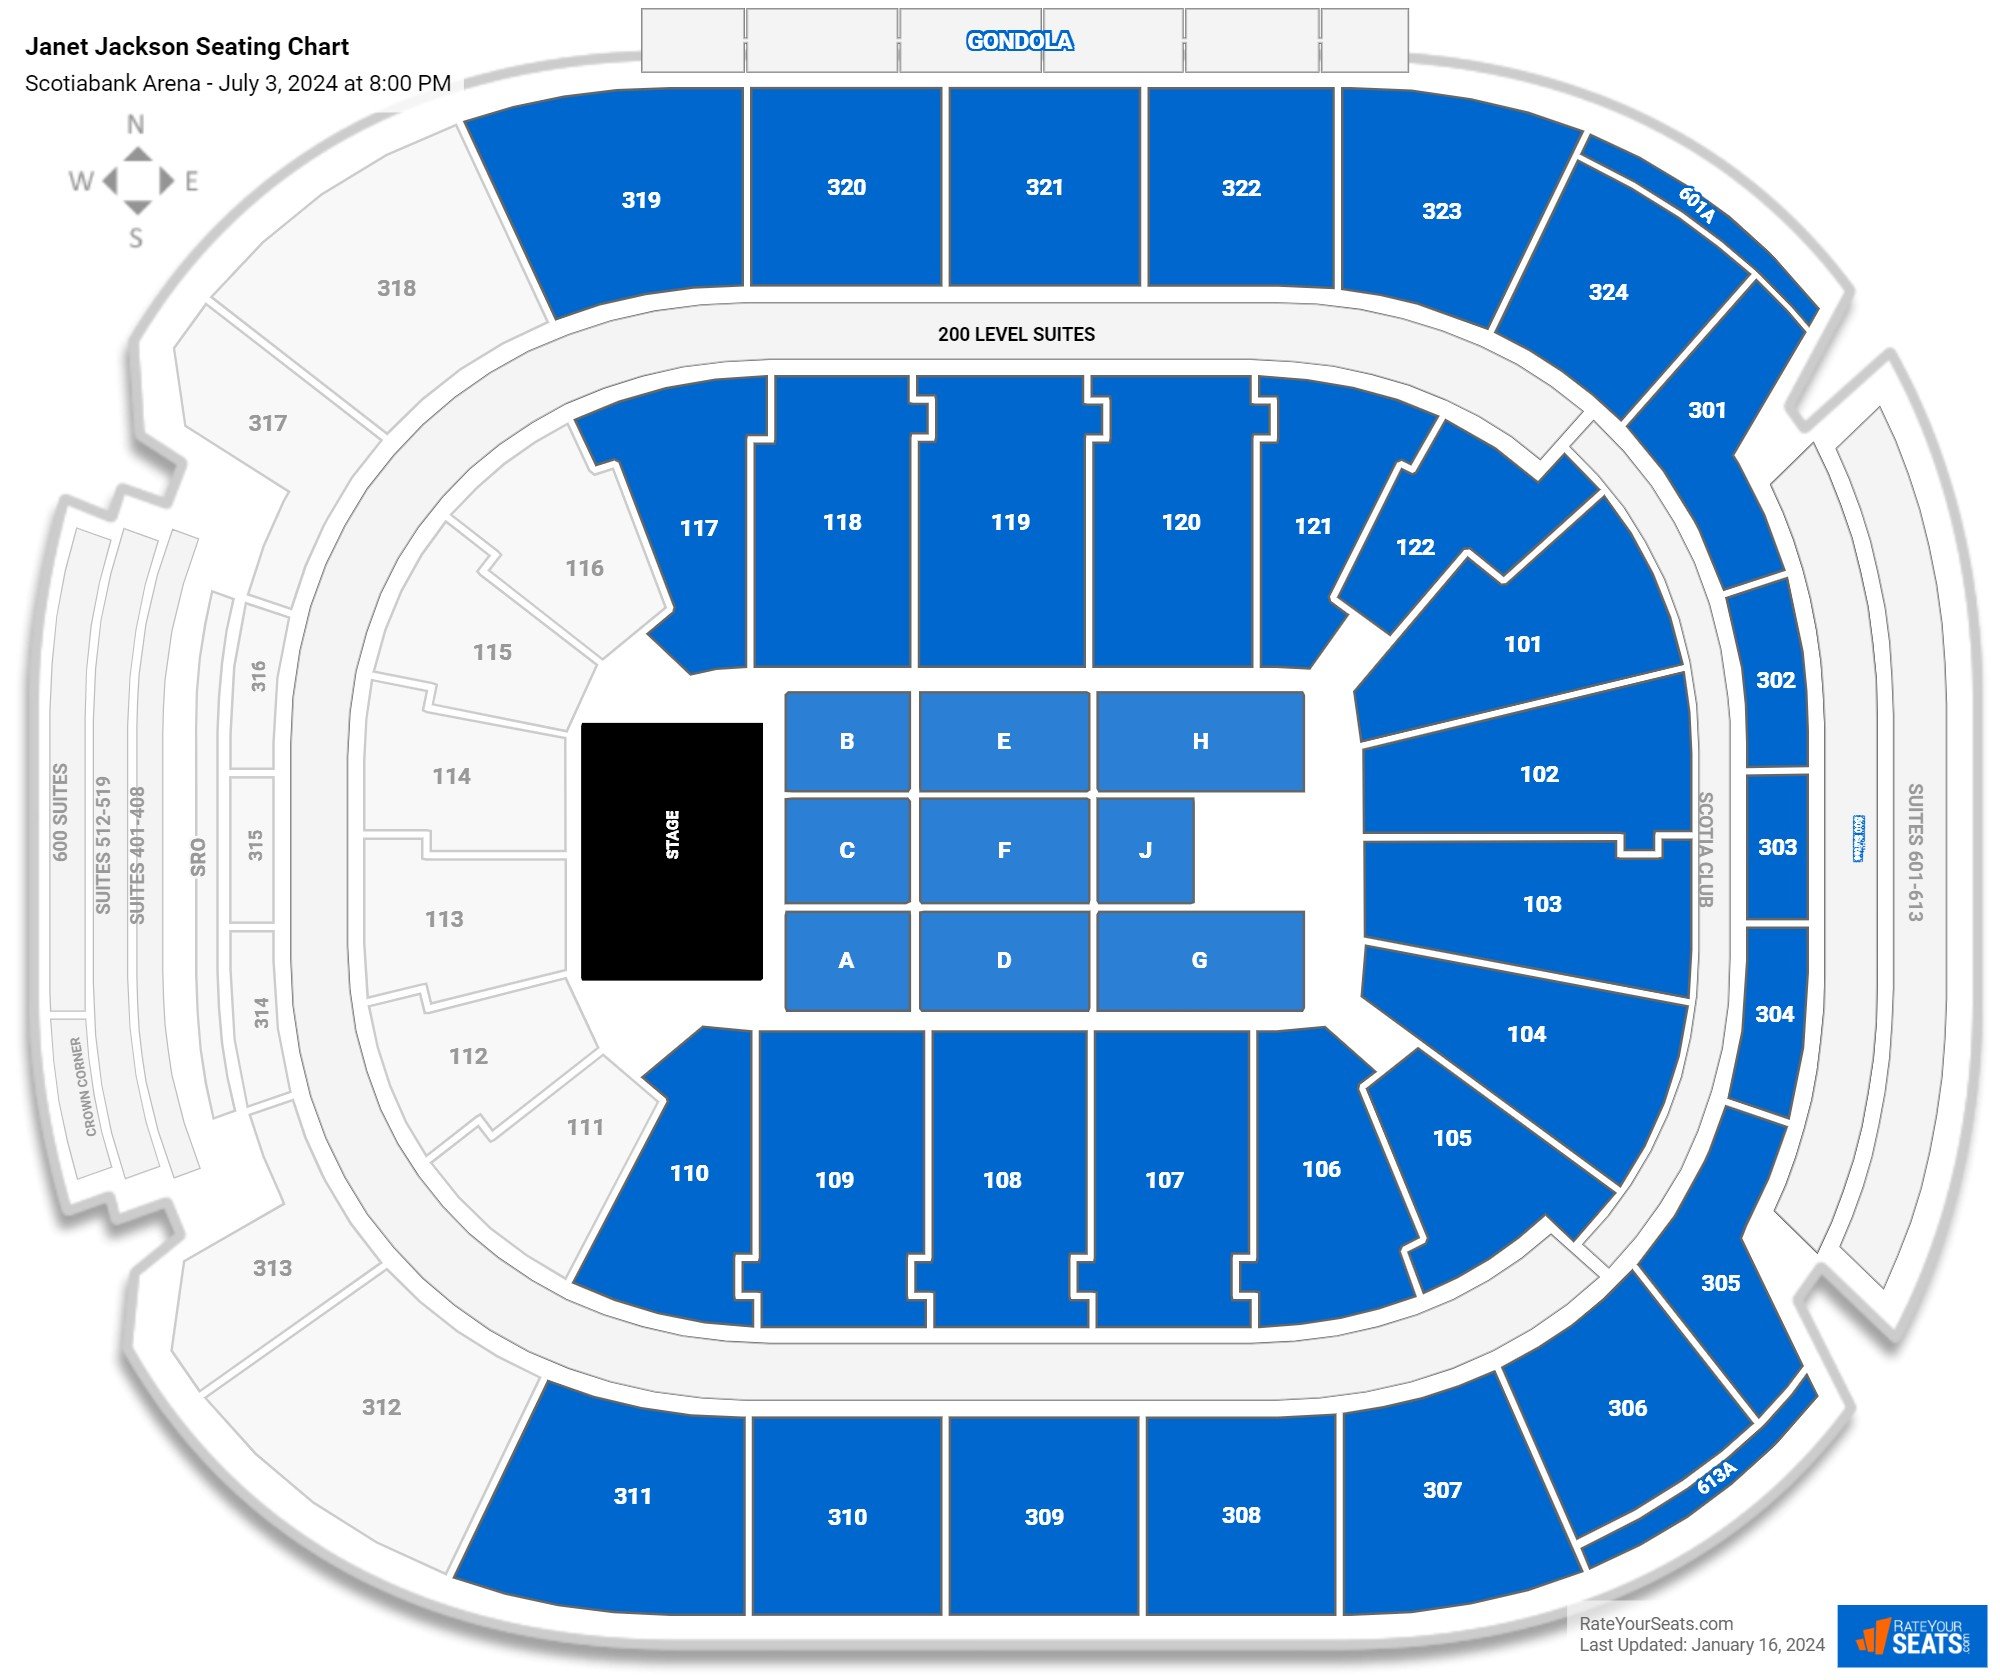 Janet Jackson seating chart Scotiabank Arena